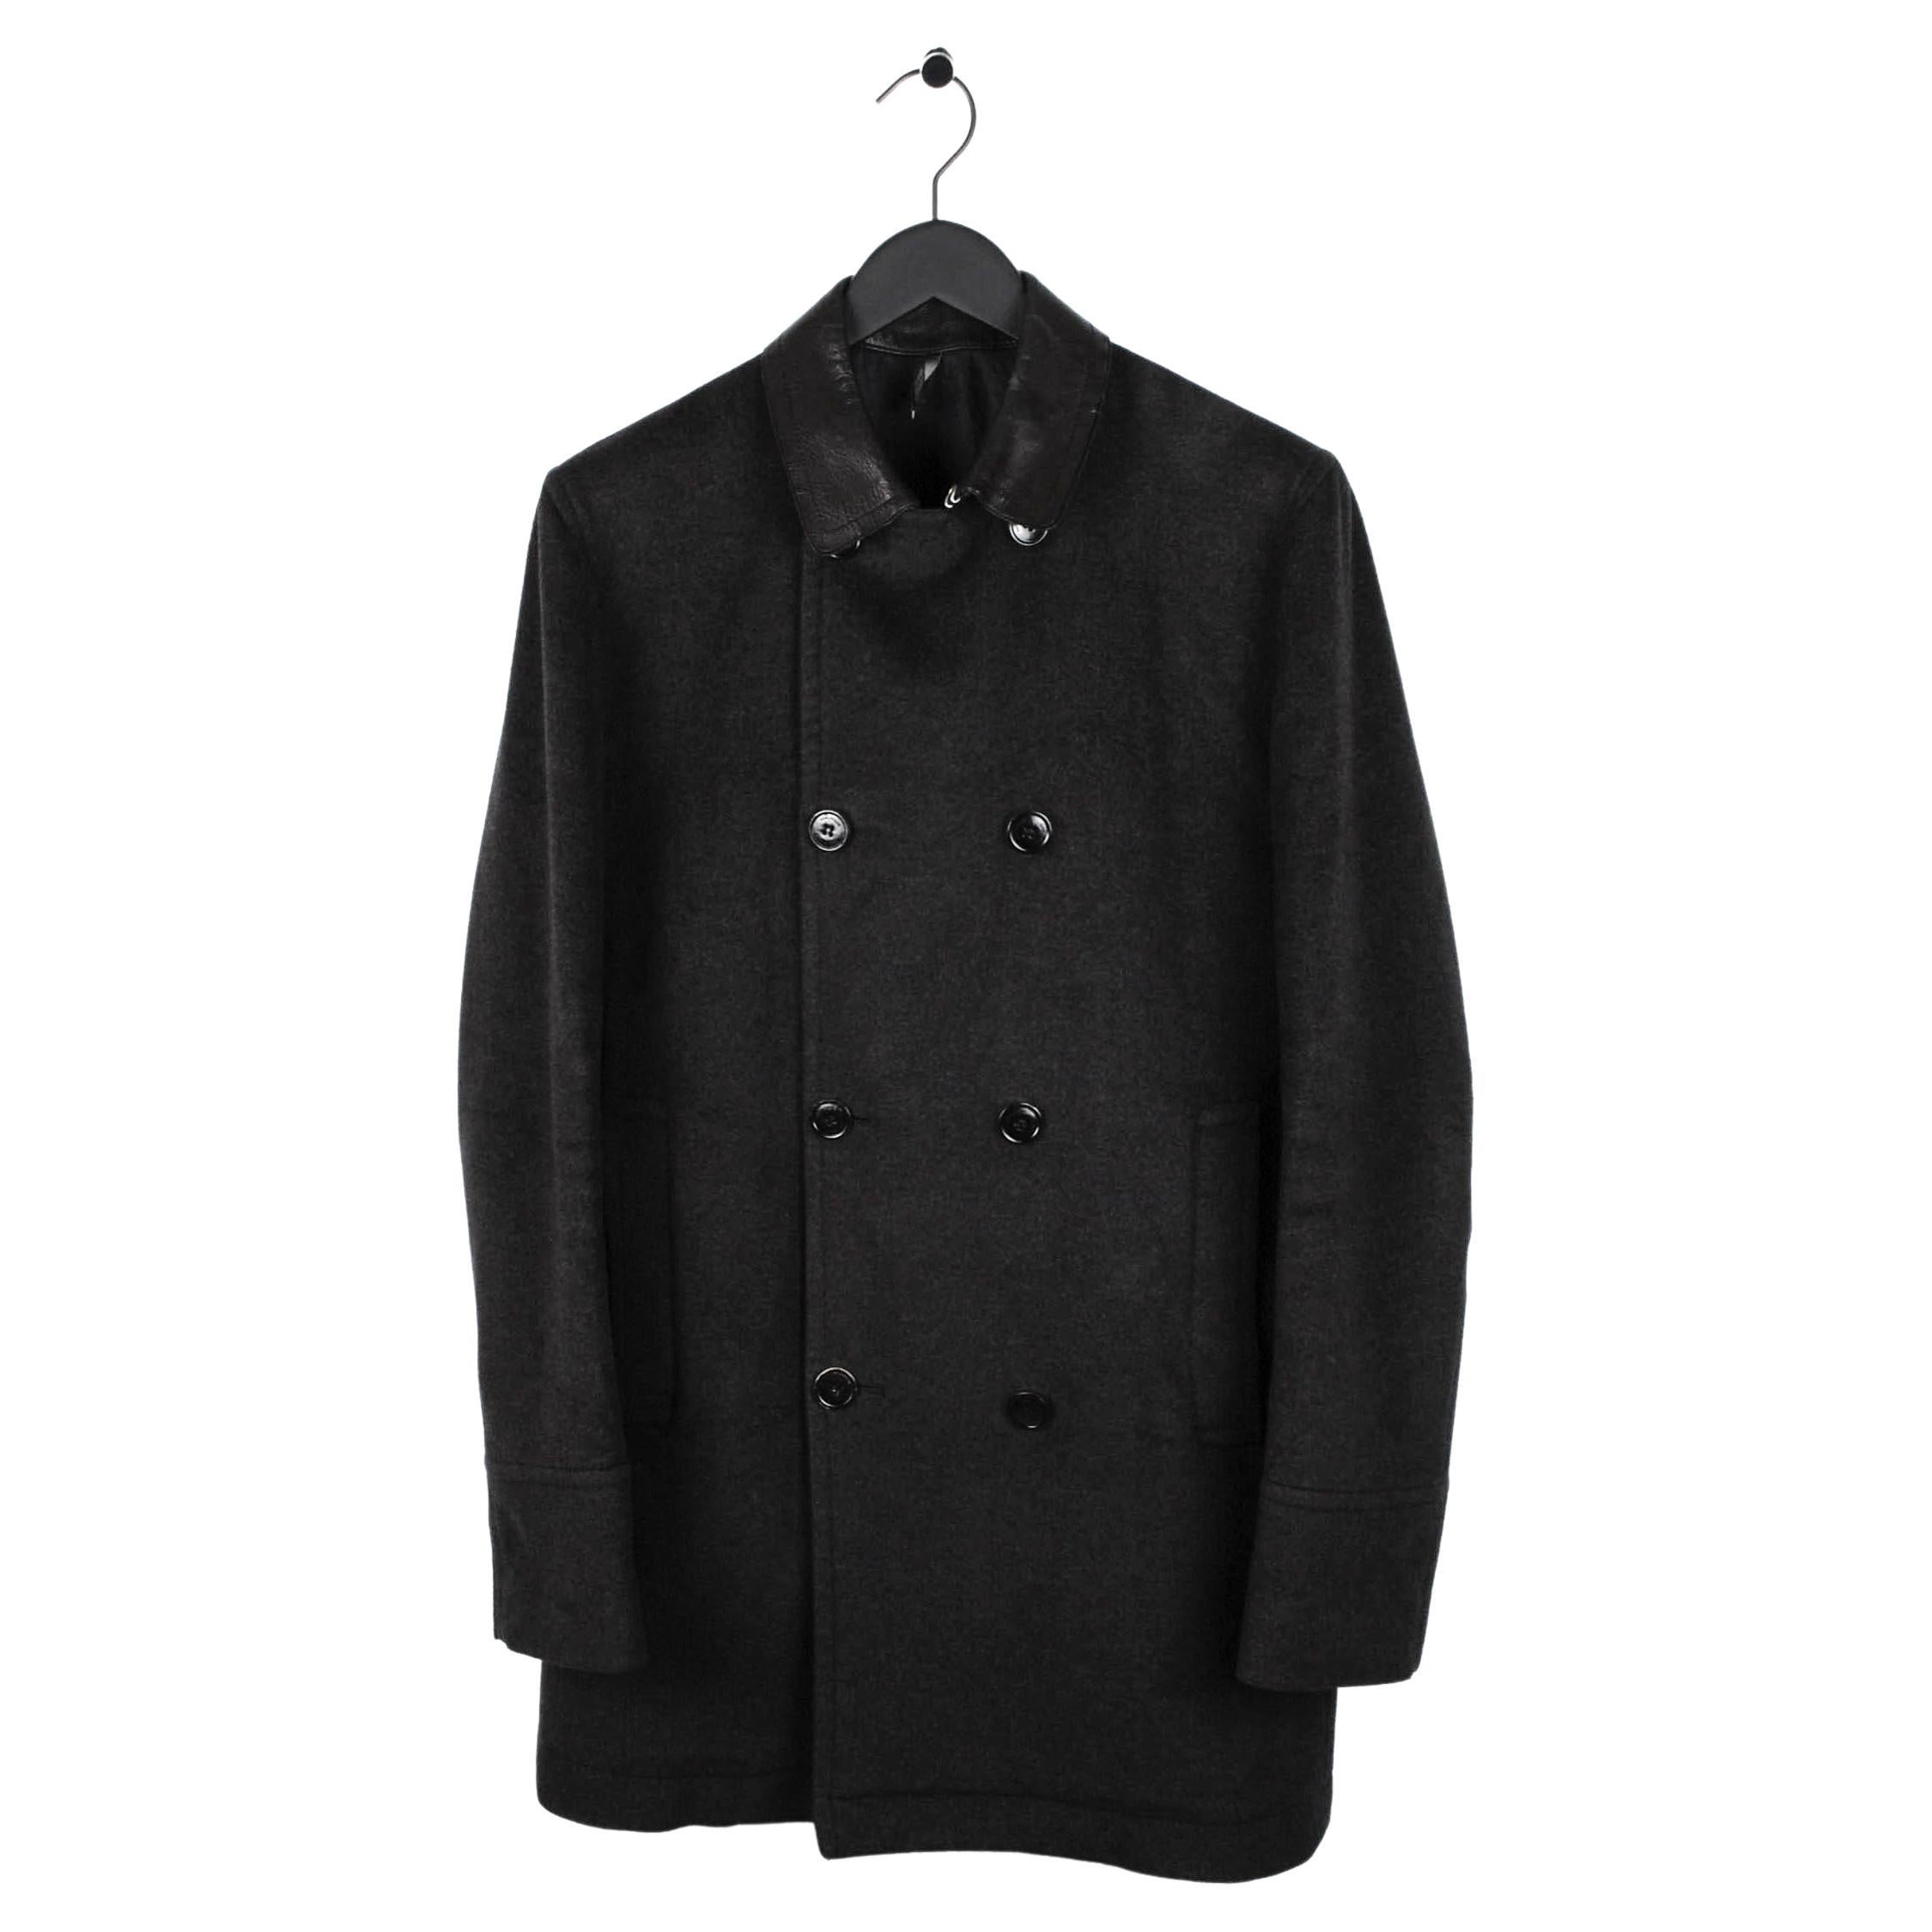 Dior Homme Hedi Slimane Leather Details Peacoat Men Coat Size 48IT (M/L)